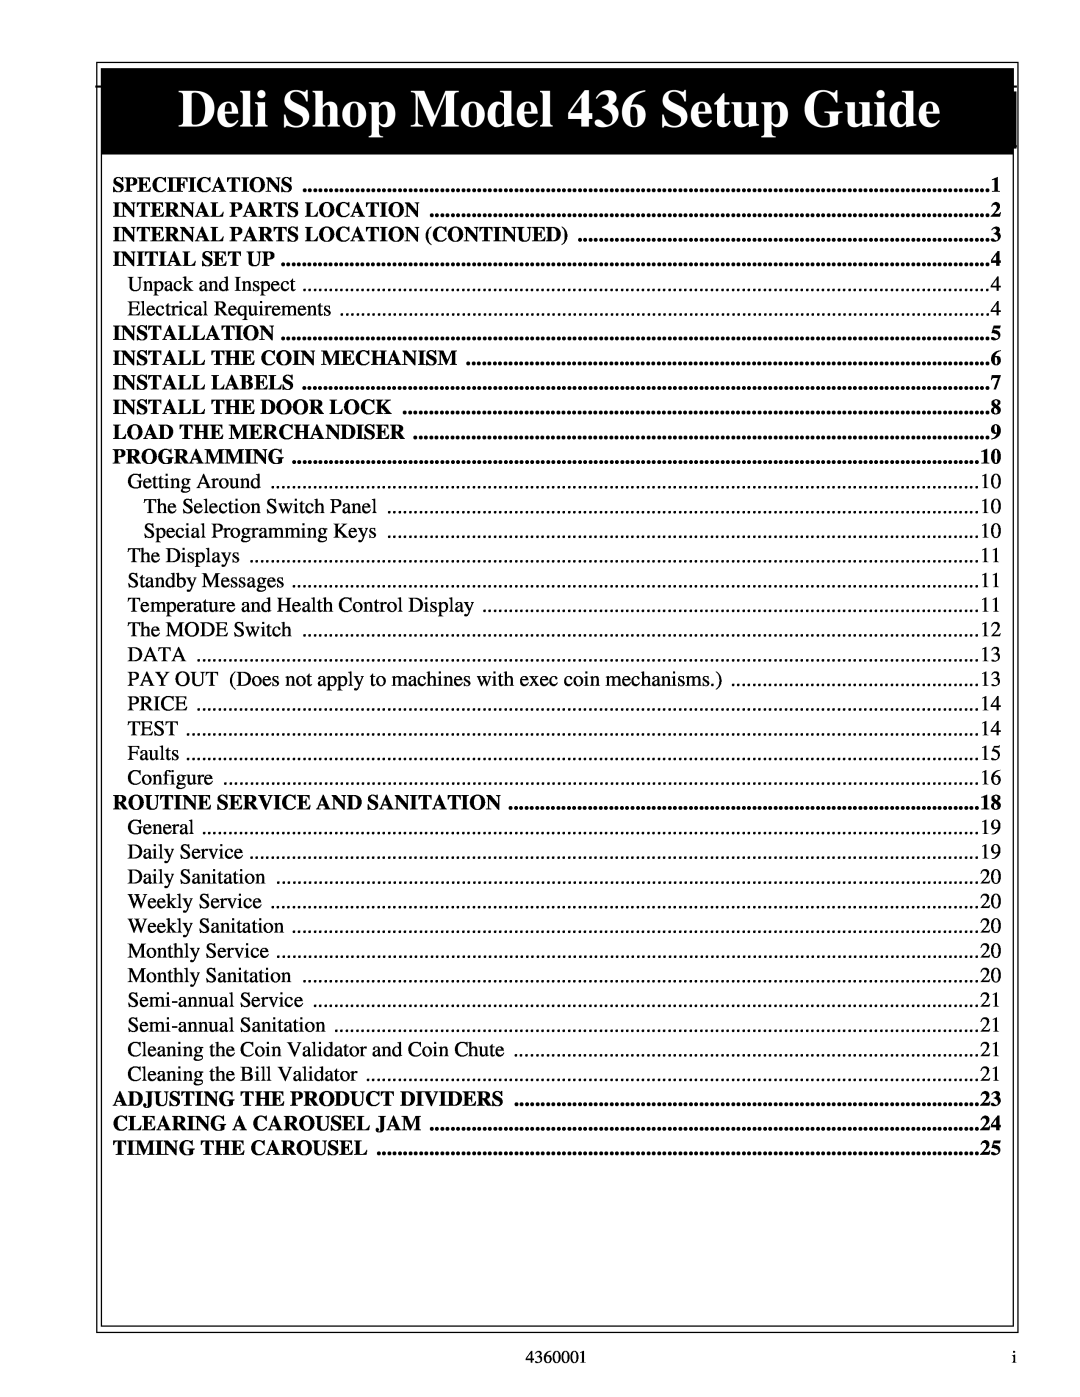 Crane Merchandising Systems manual Deli Shop Model 436 Setup Guide, Specifications, Internal Parts Location, Programming 